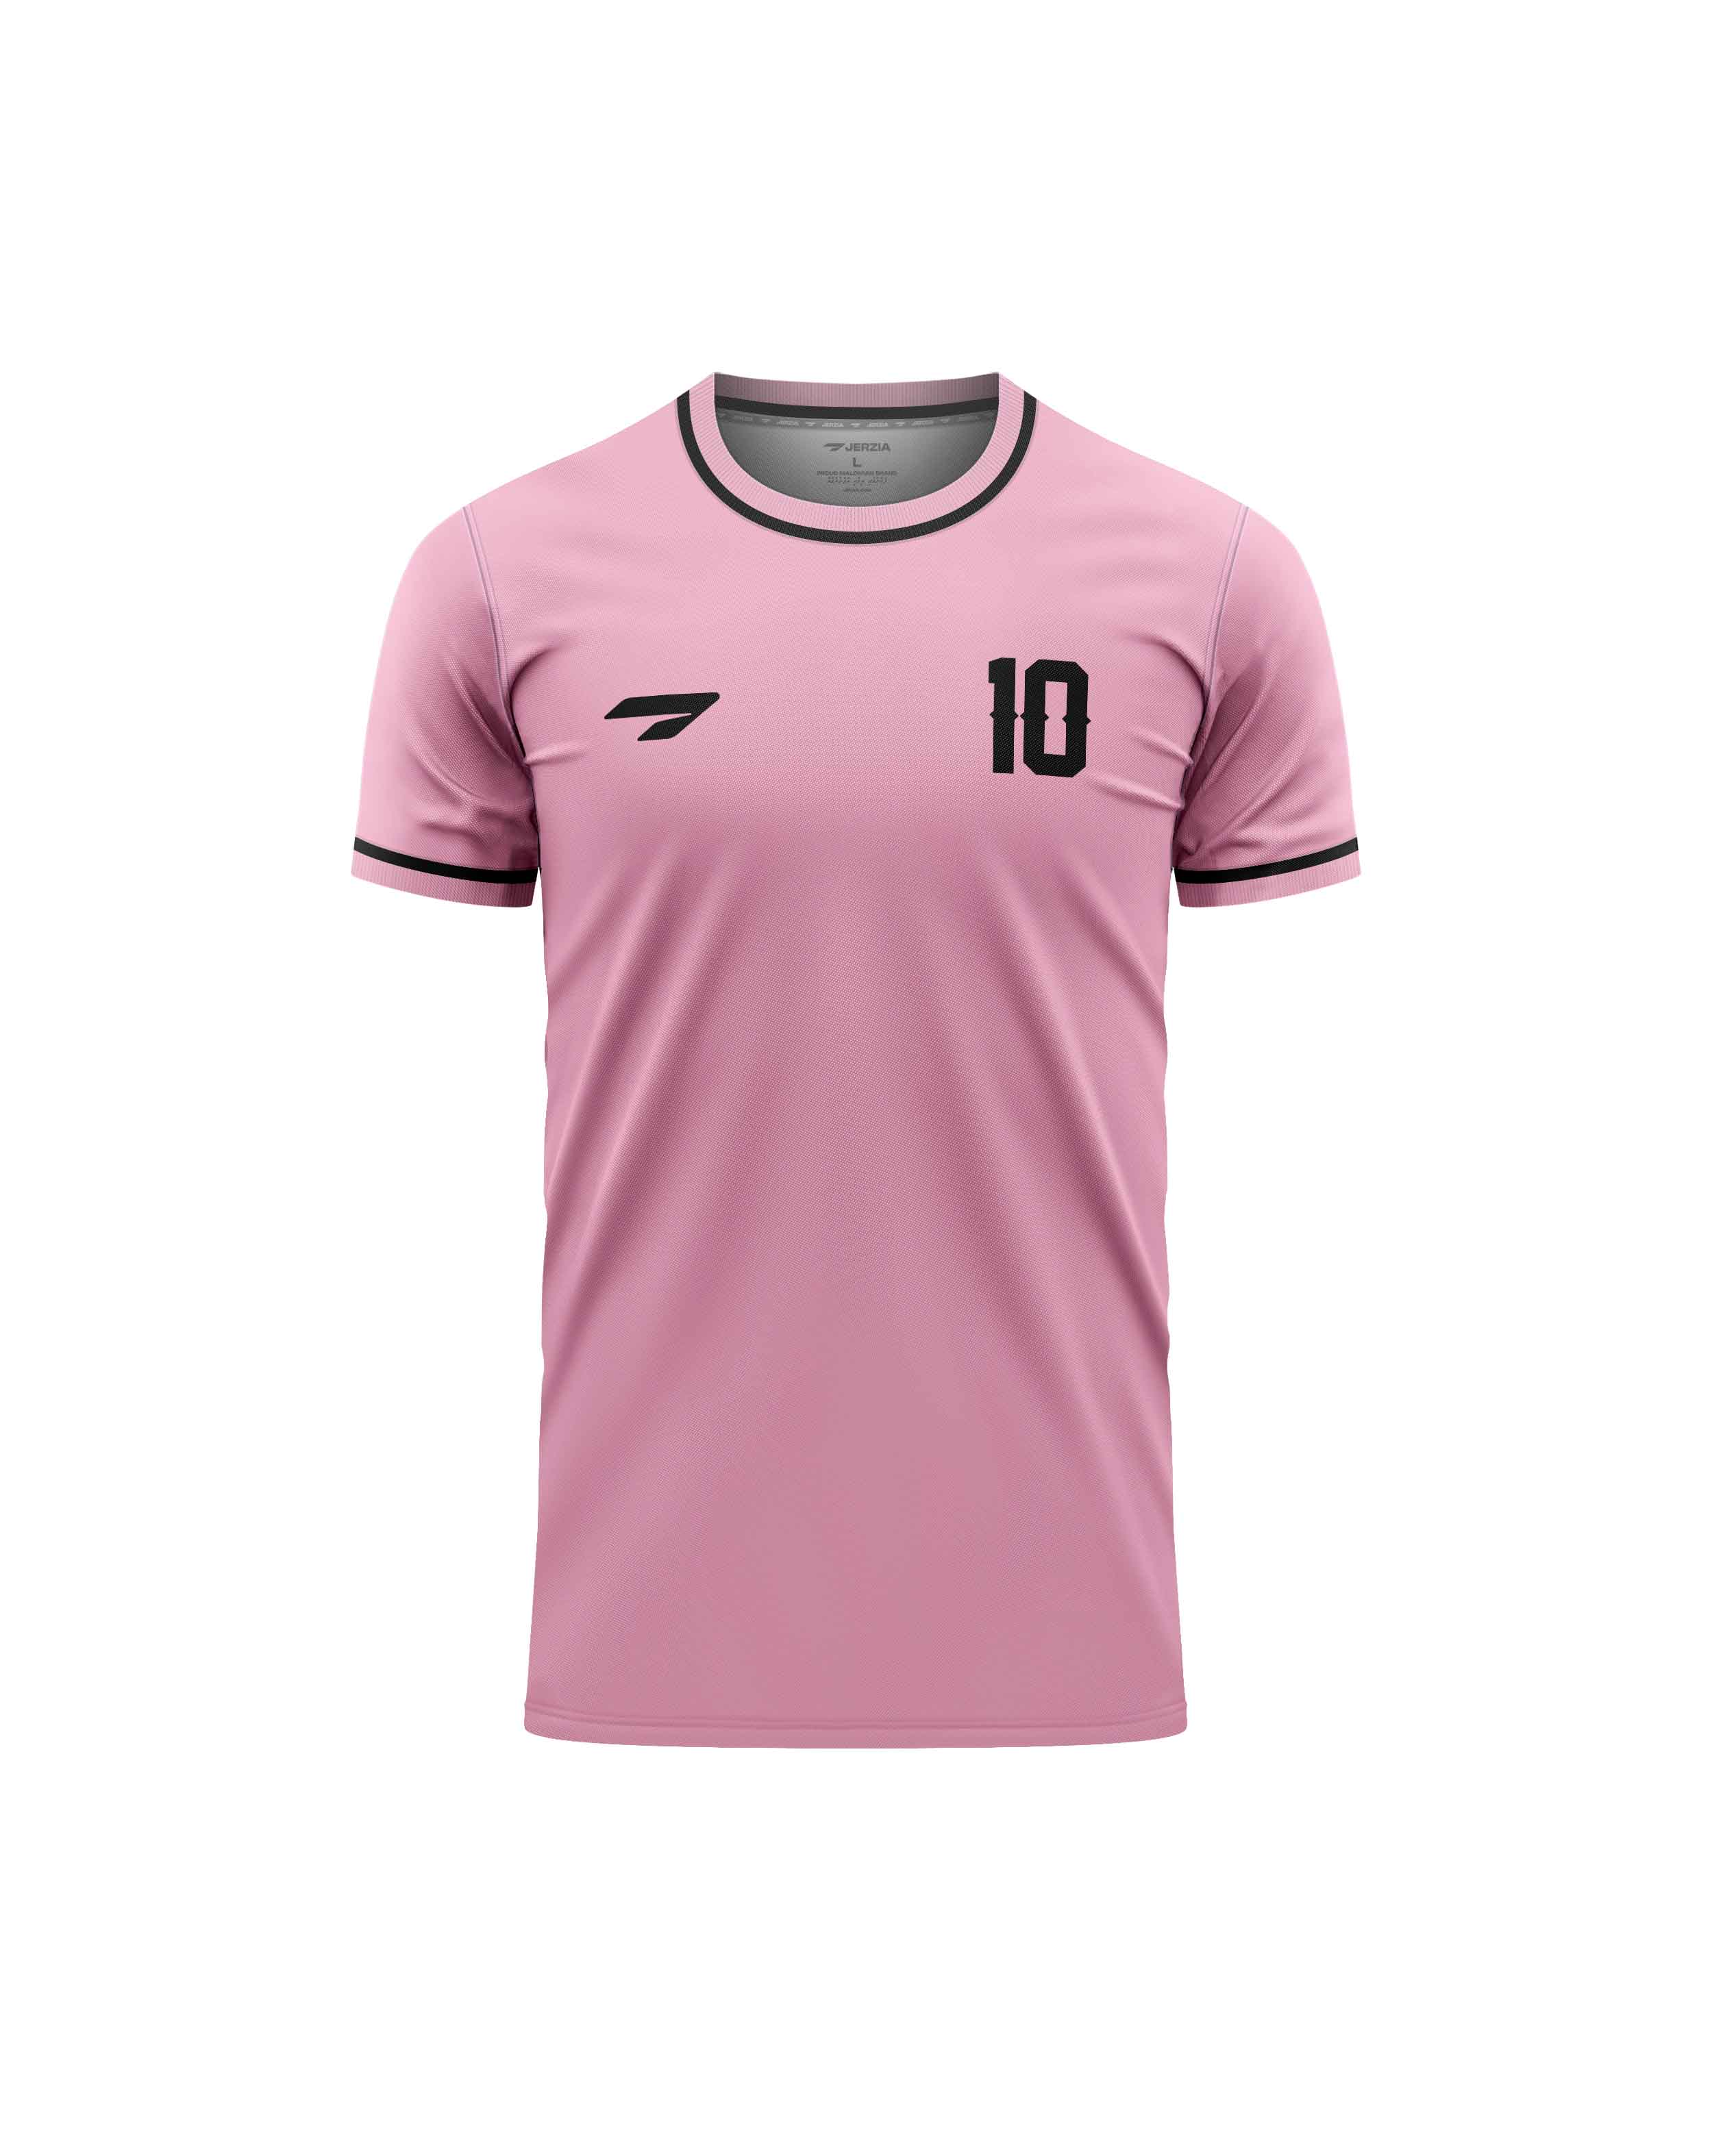 GOAT 10 Pink SS Jersey